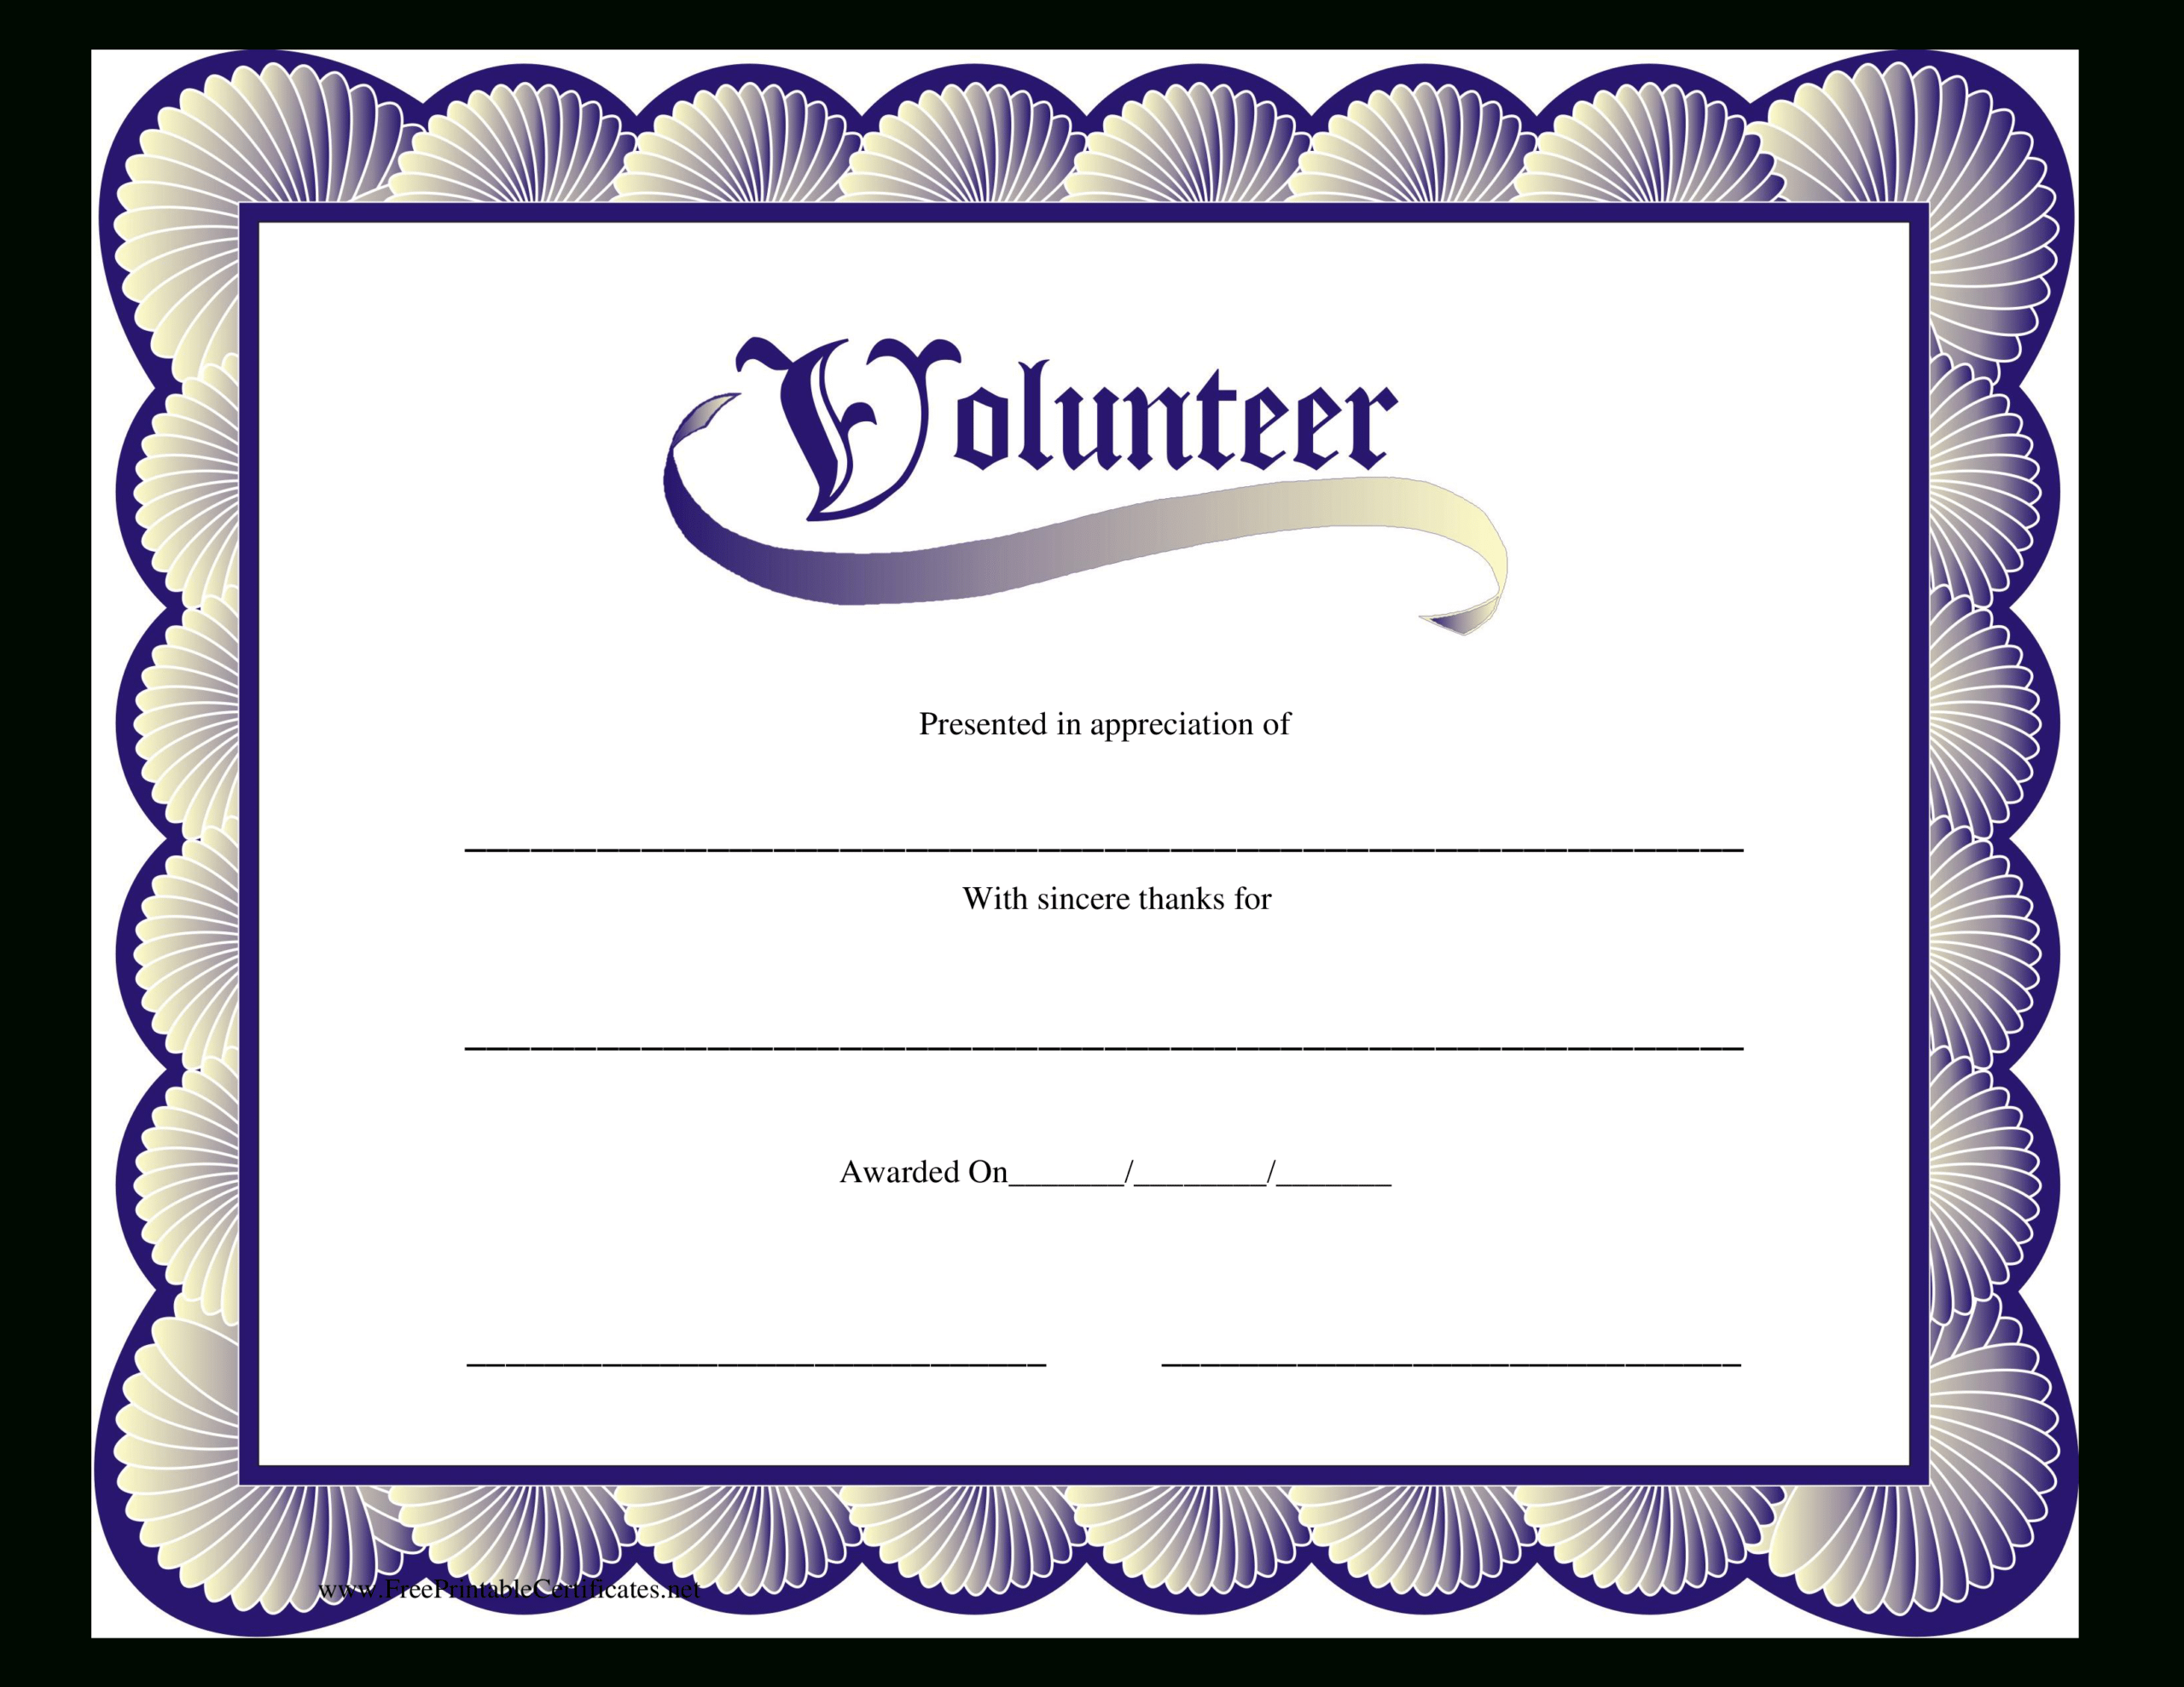 Volunteer Certificate | Templates At Allbusinesstemplates In Volunteer Certificate Template